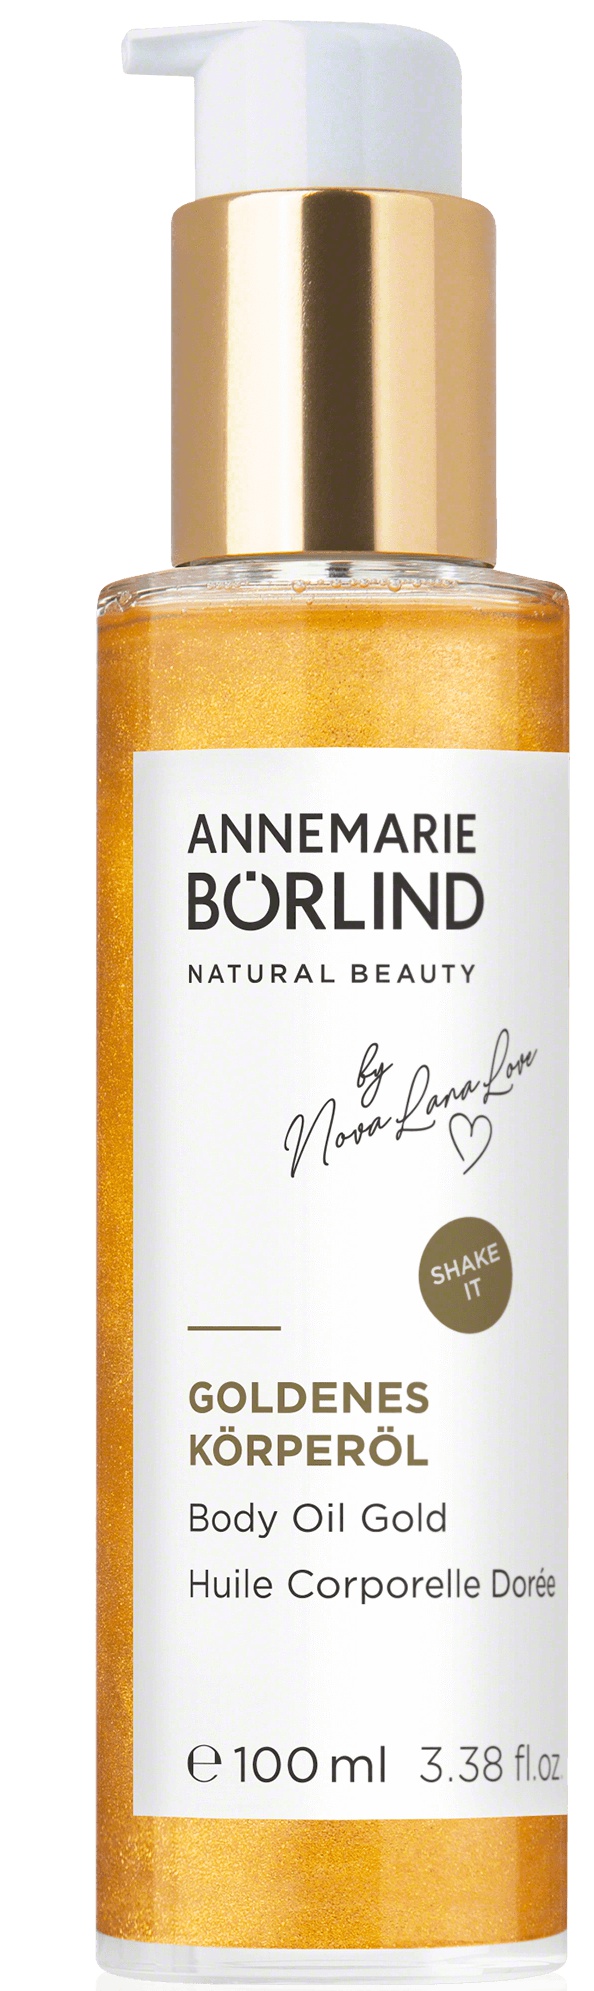 Annemarie Börlind Body Oil Gold